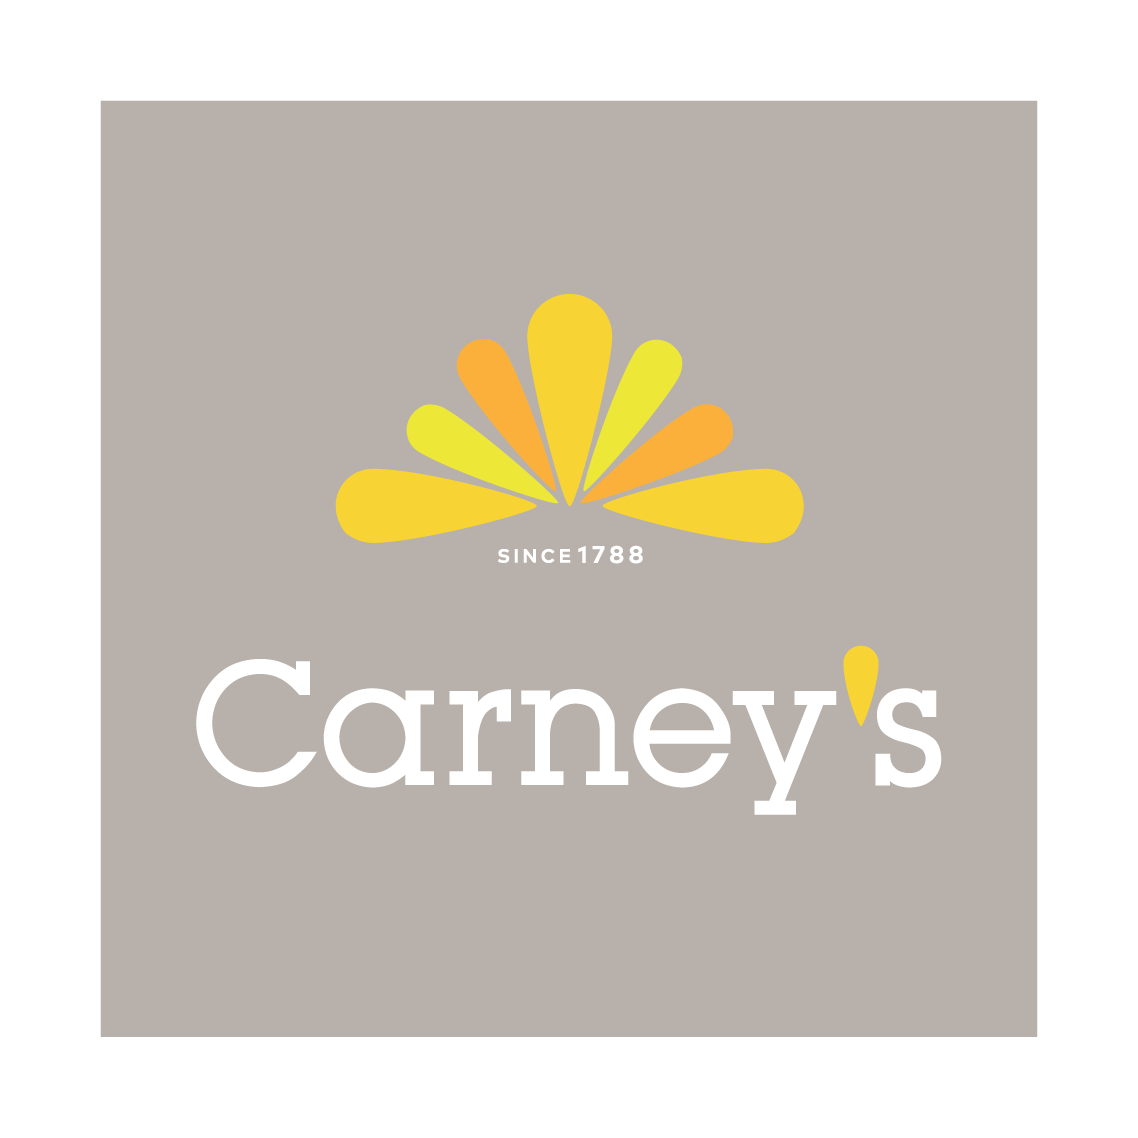 Carney's